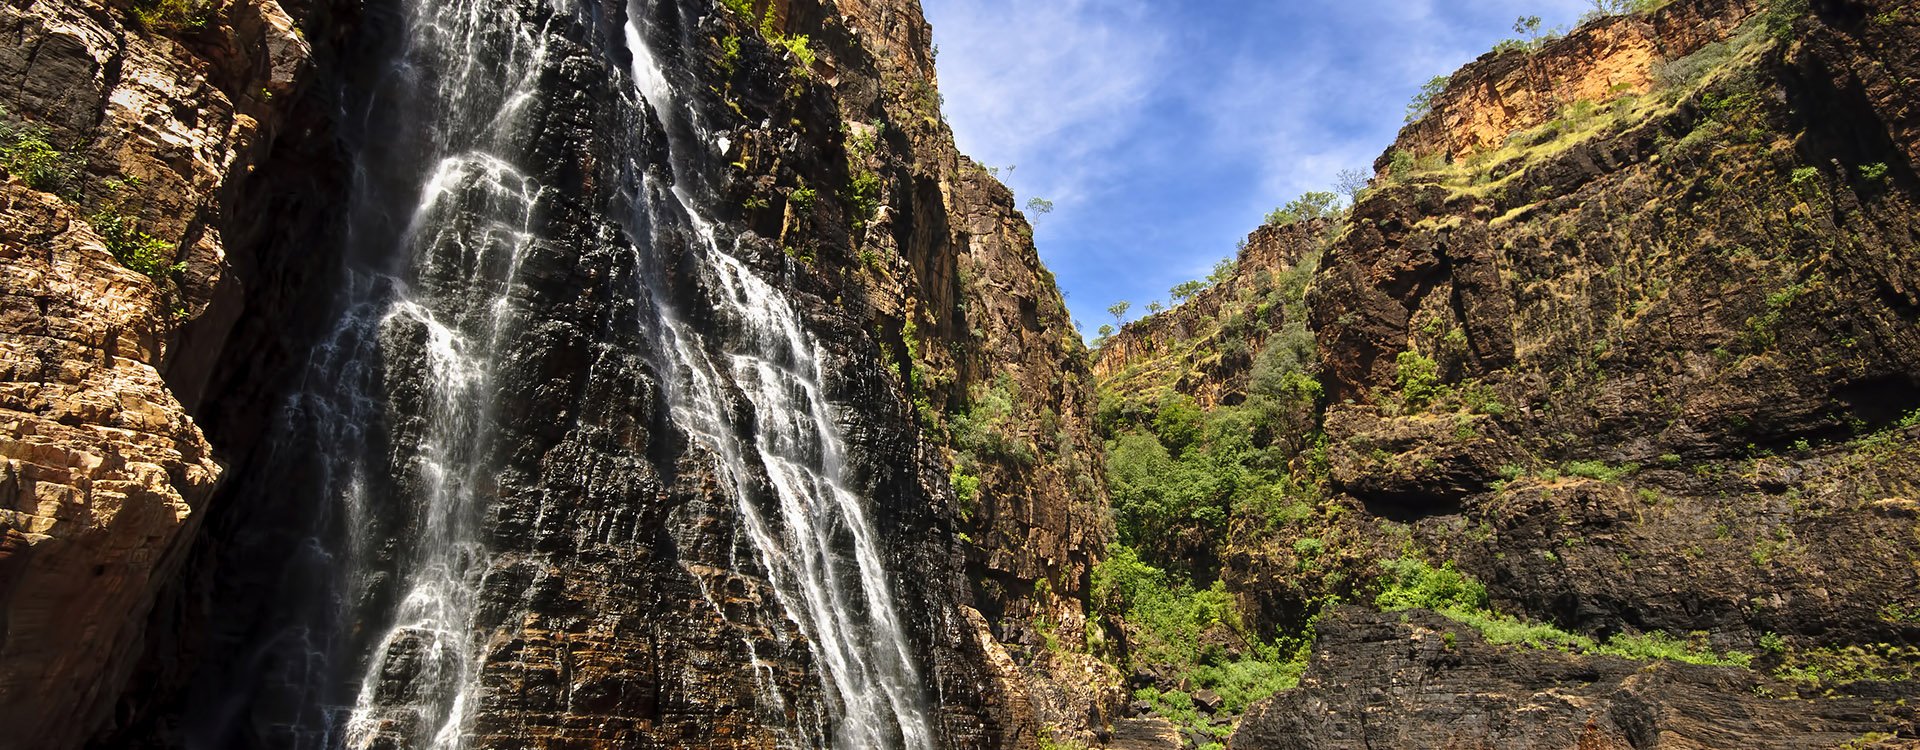 Twin Falls, Kakadu National Park, Australia, Northern Territory